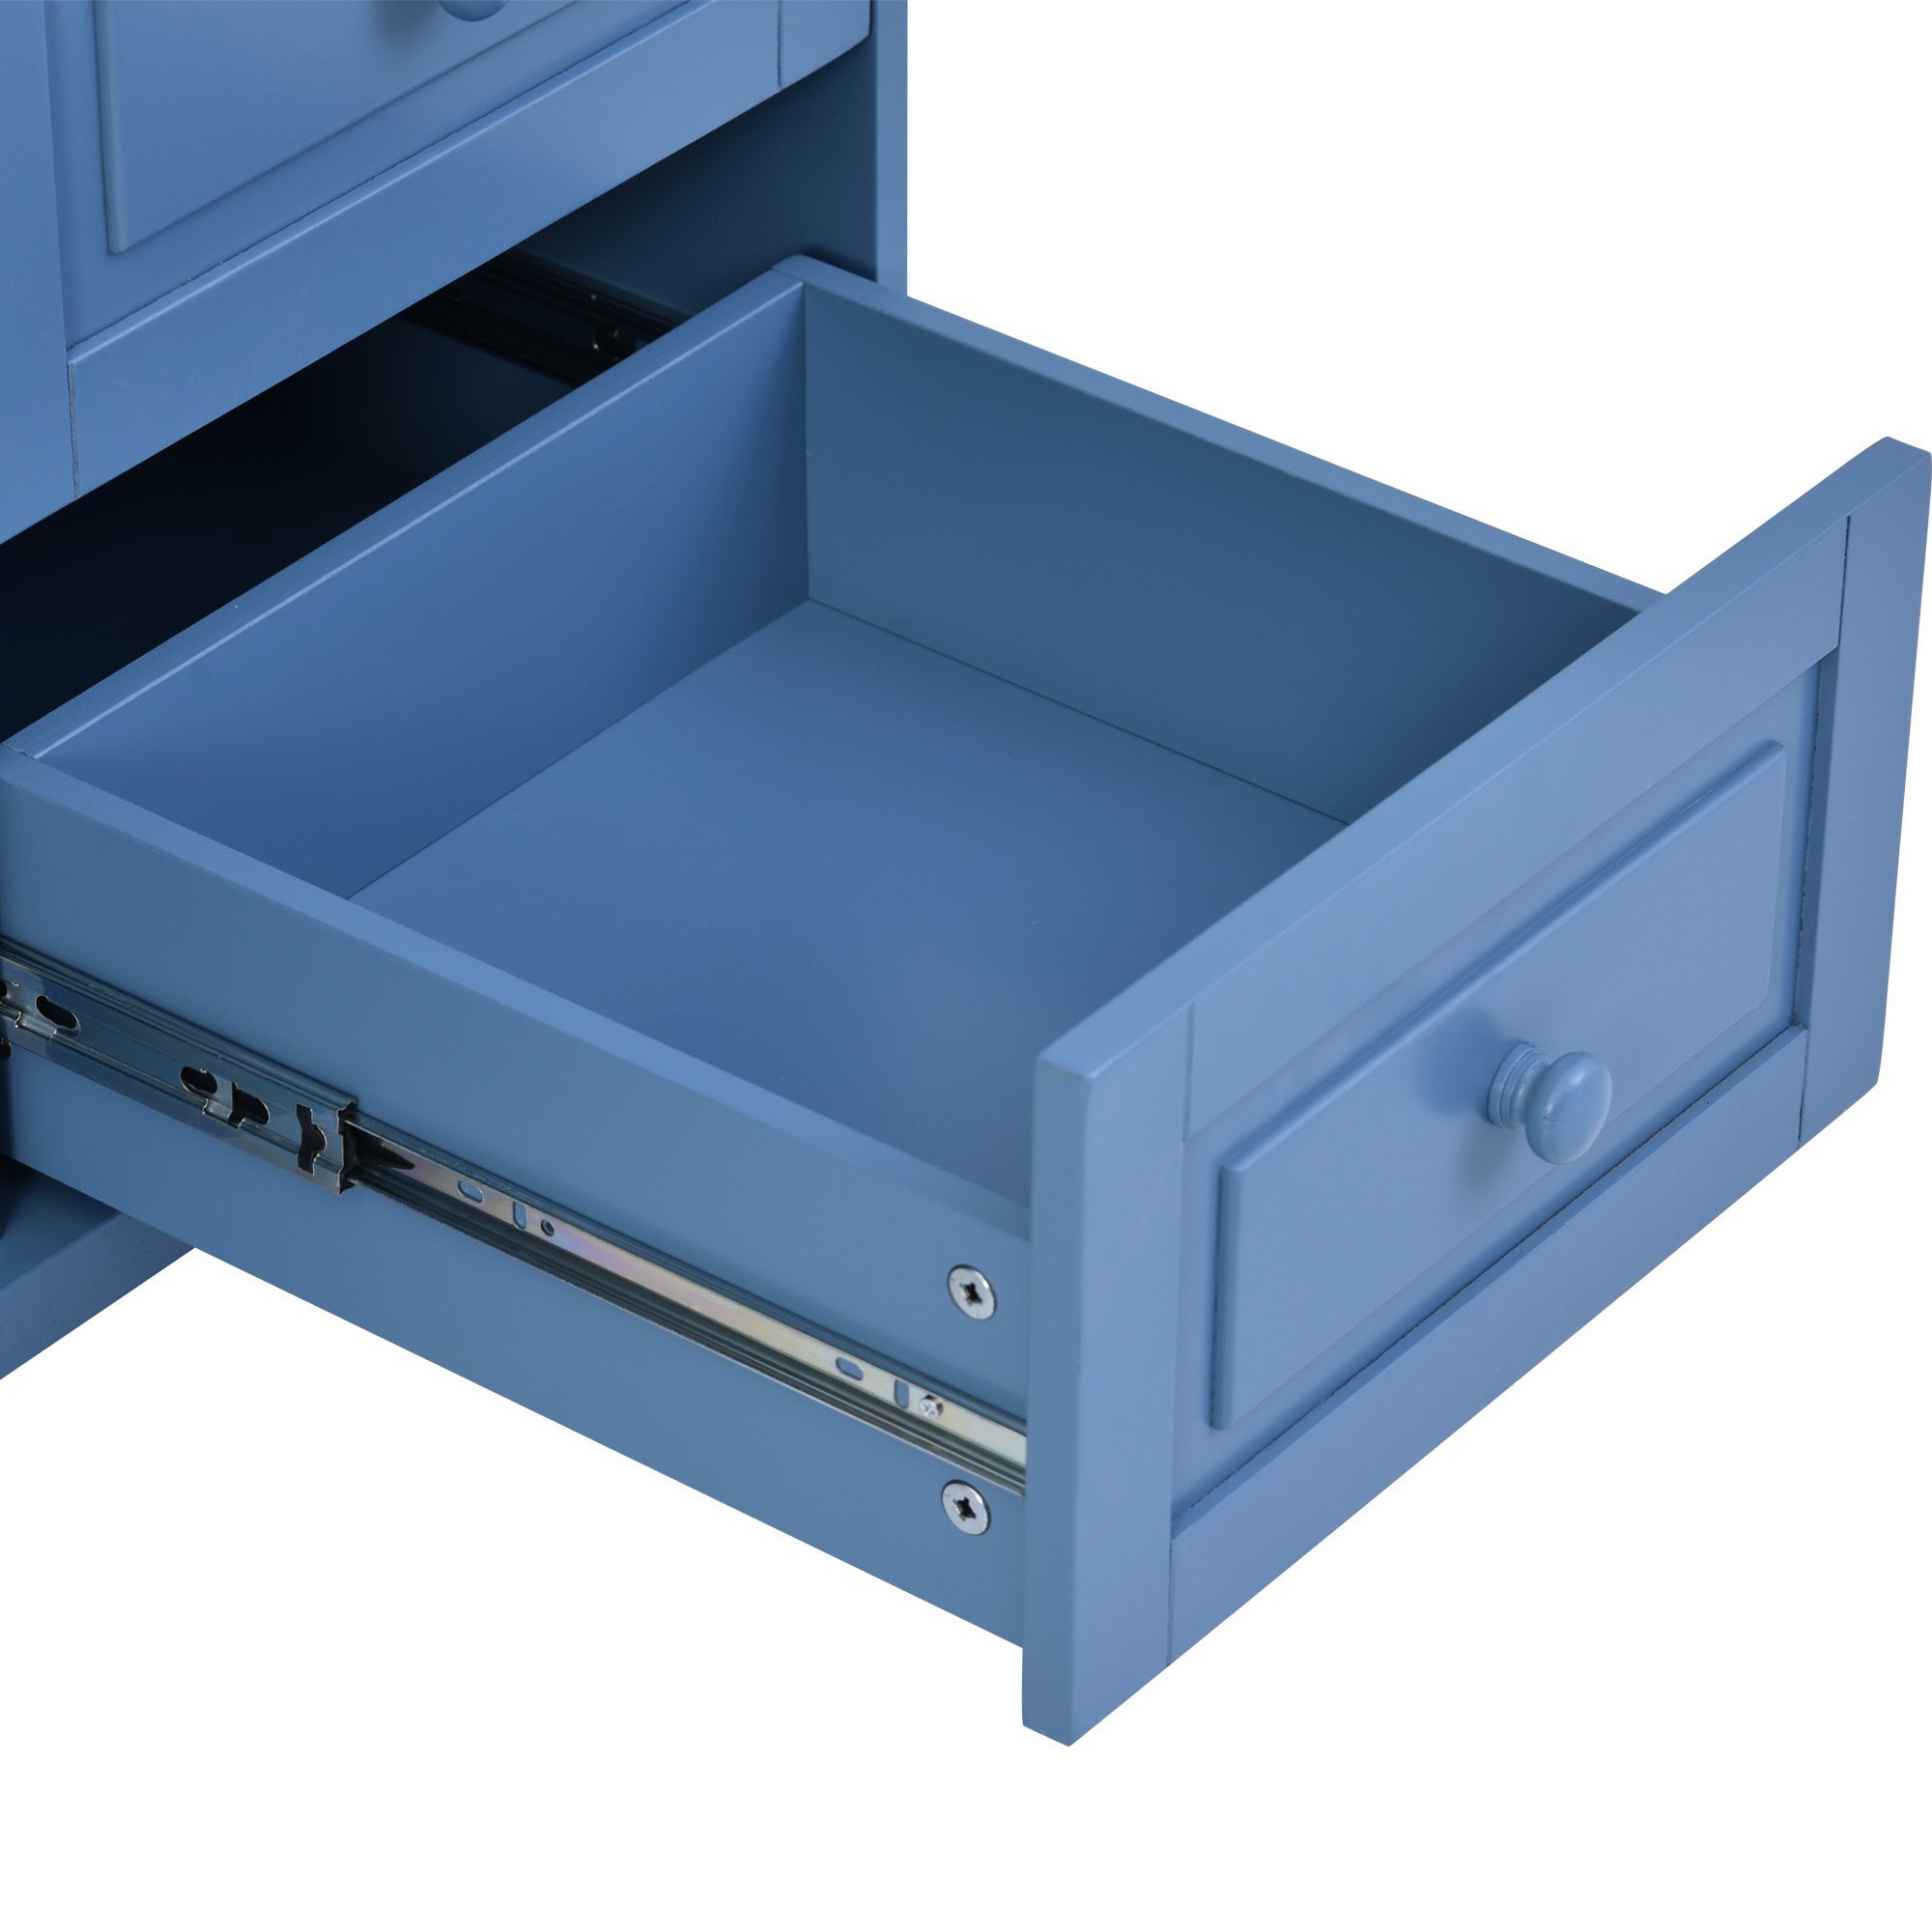 Kitchen Island Cart with Rubber Wood Desktop for Storage, Blue